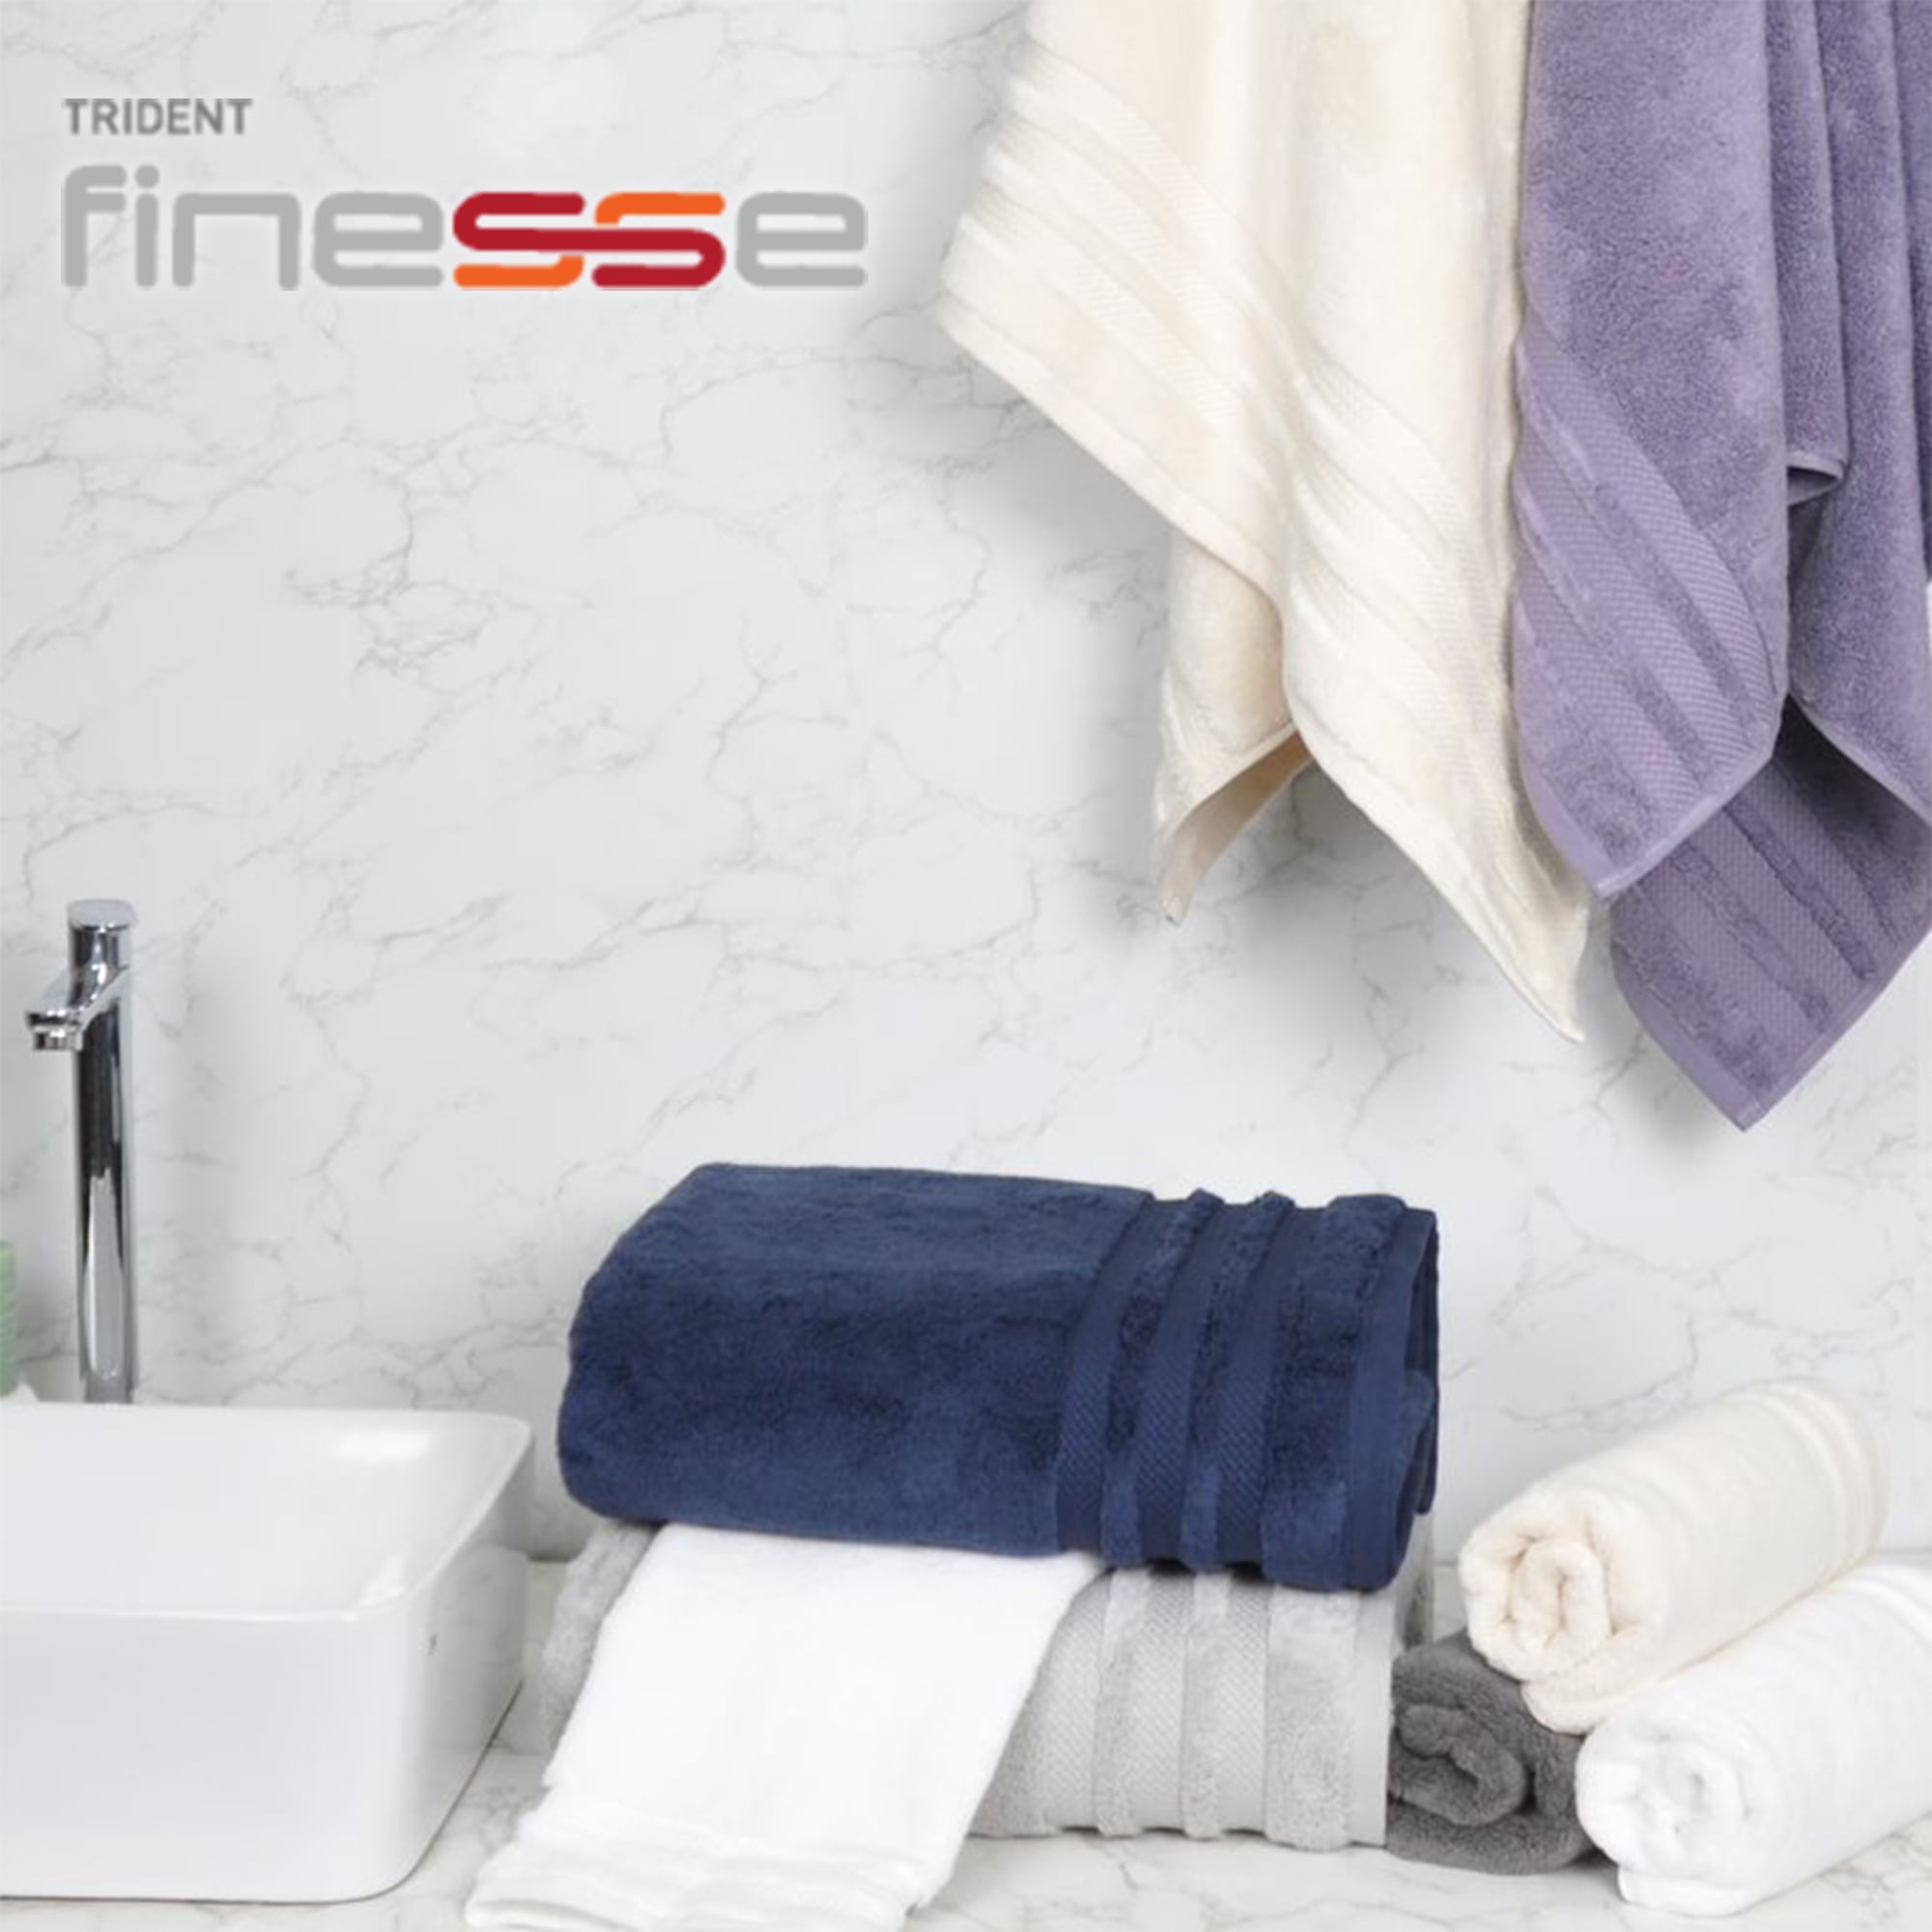 Noble House Ultra Soft 100% Cotton Extra Heavy Hotel & Spa Feel 6pc Bath Towel Set Bathroom 2 Bath Towels 2 Hand Towels 2 Washcloths - Blue